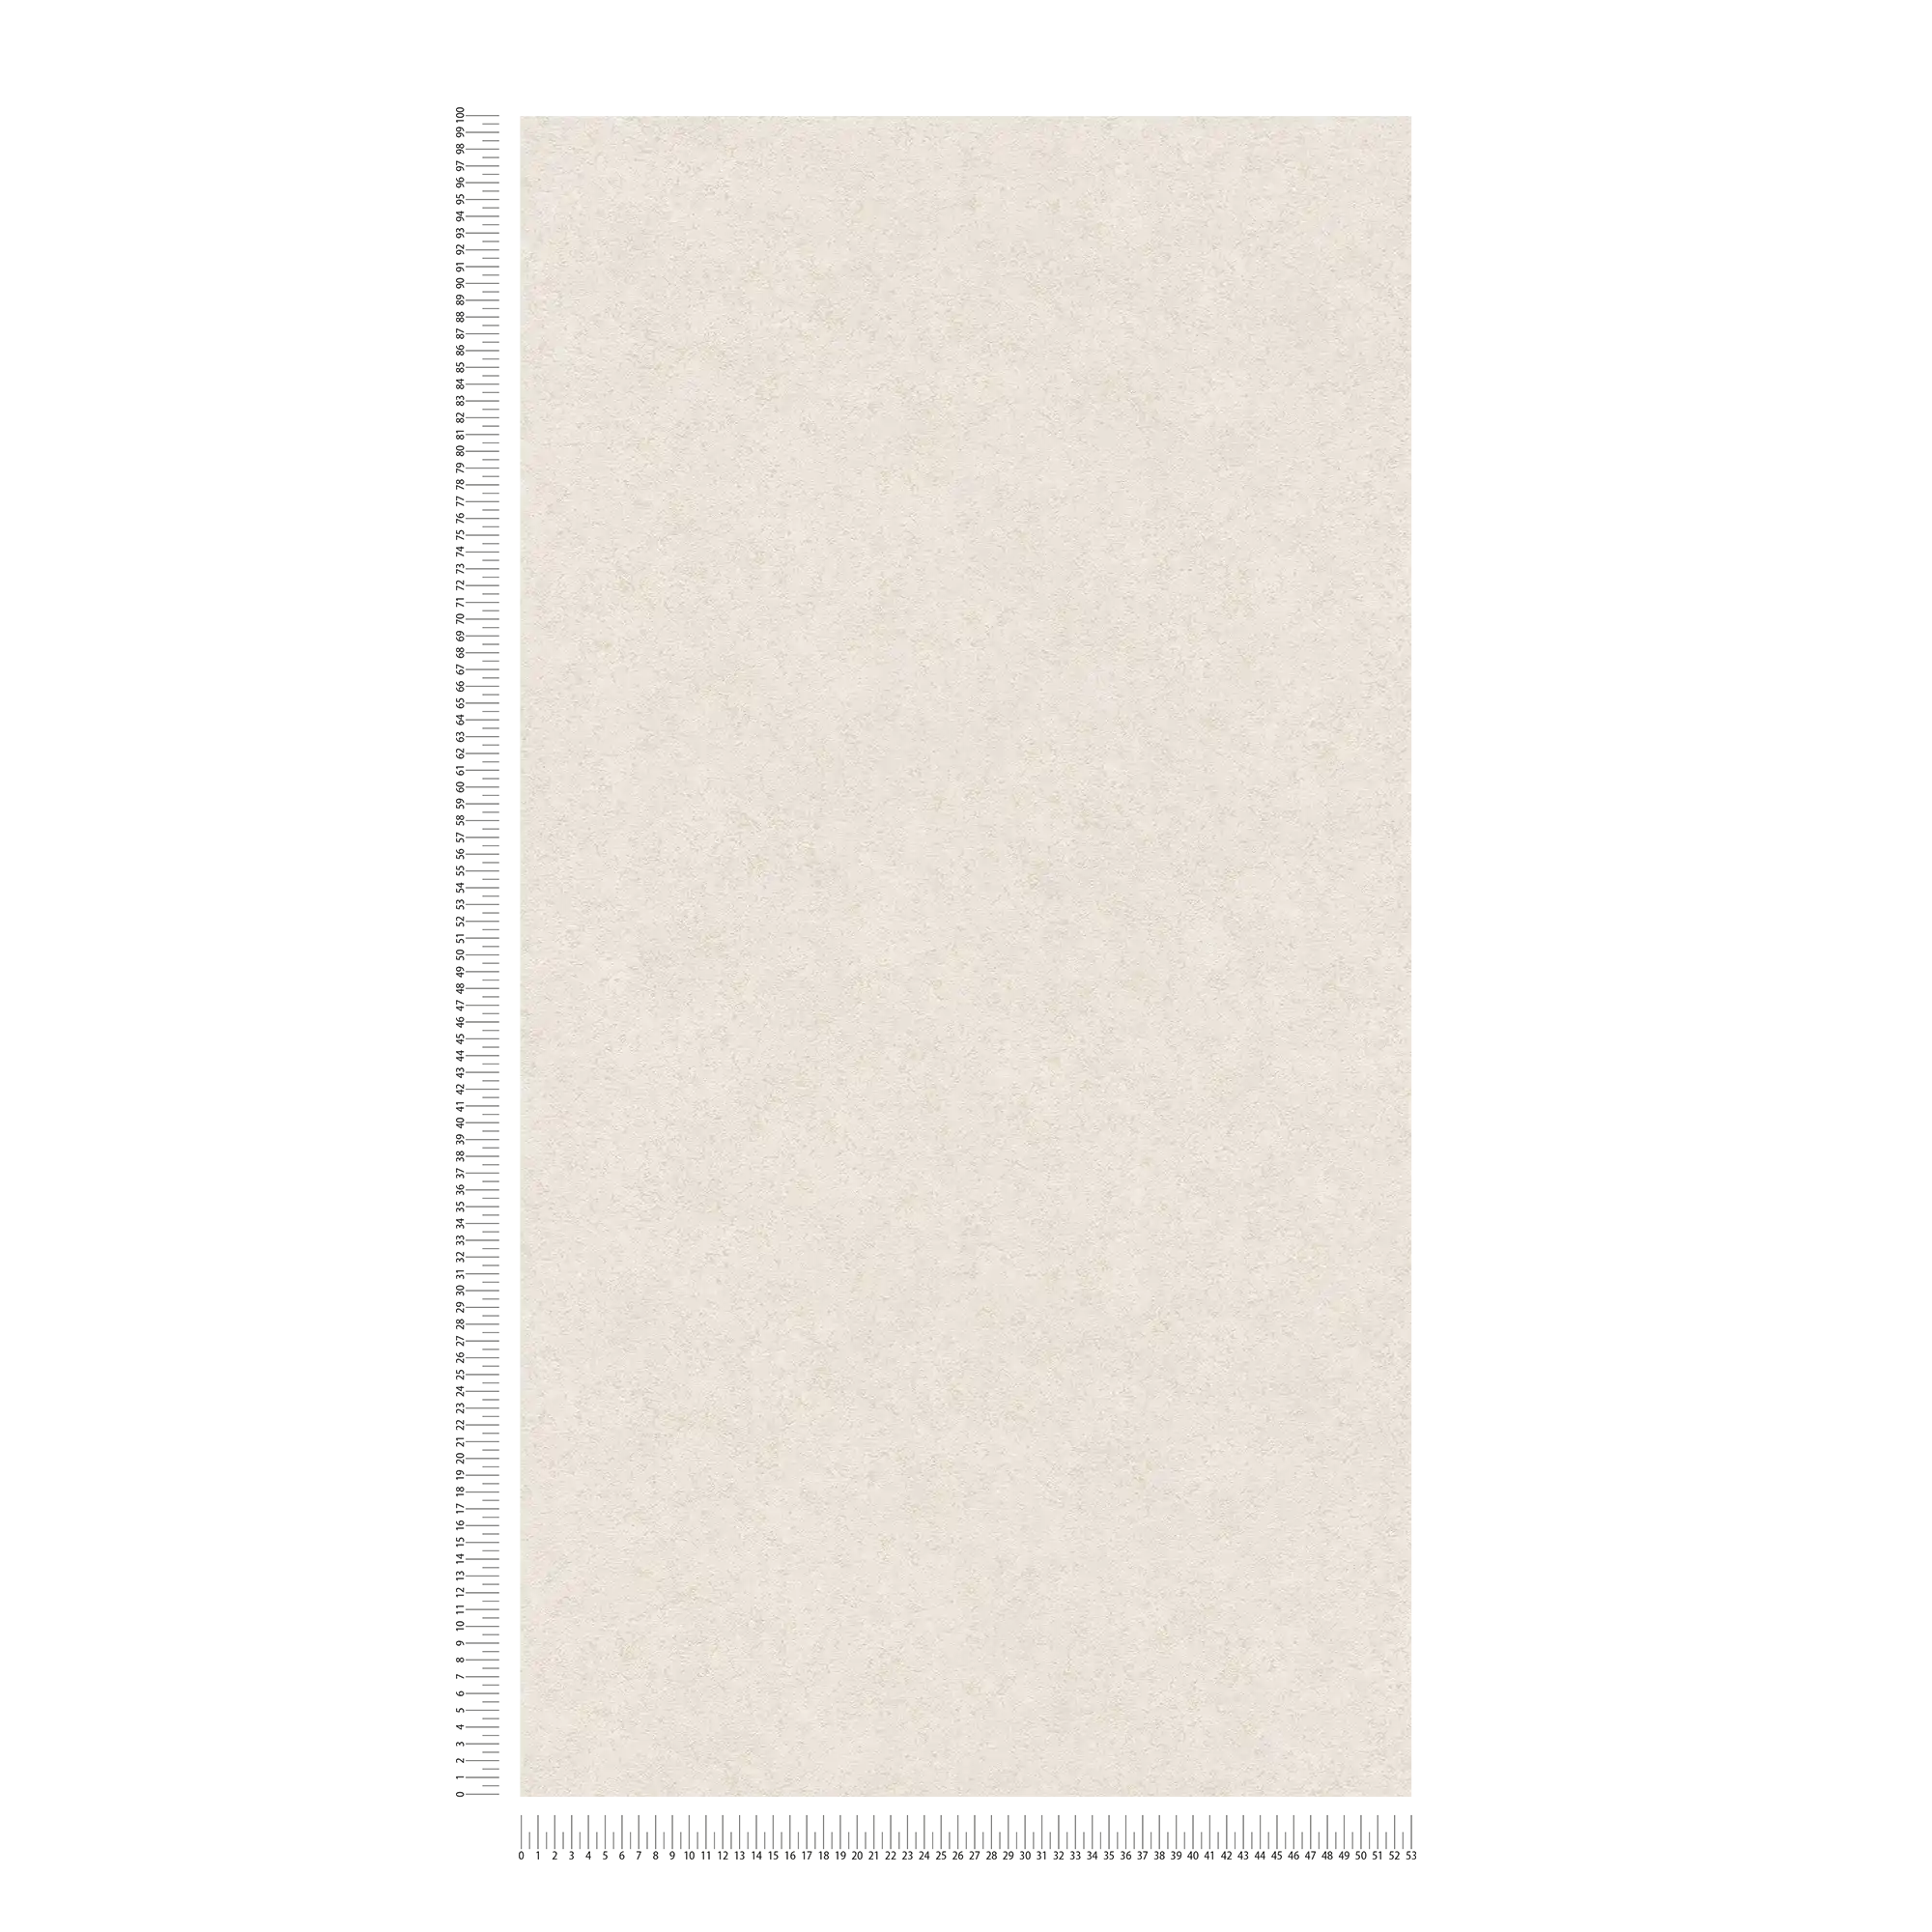             Matt non-woven wallpaper with plaster look - beige, white
        